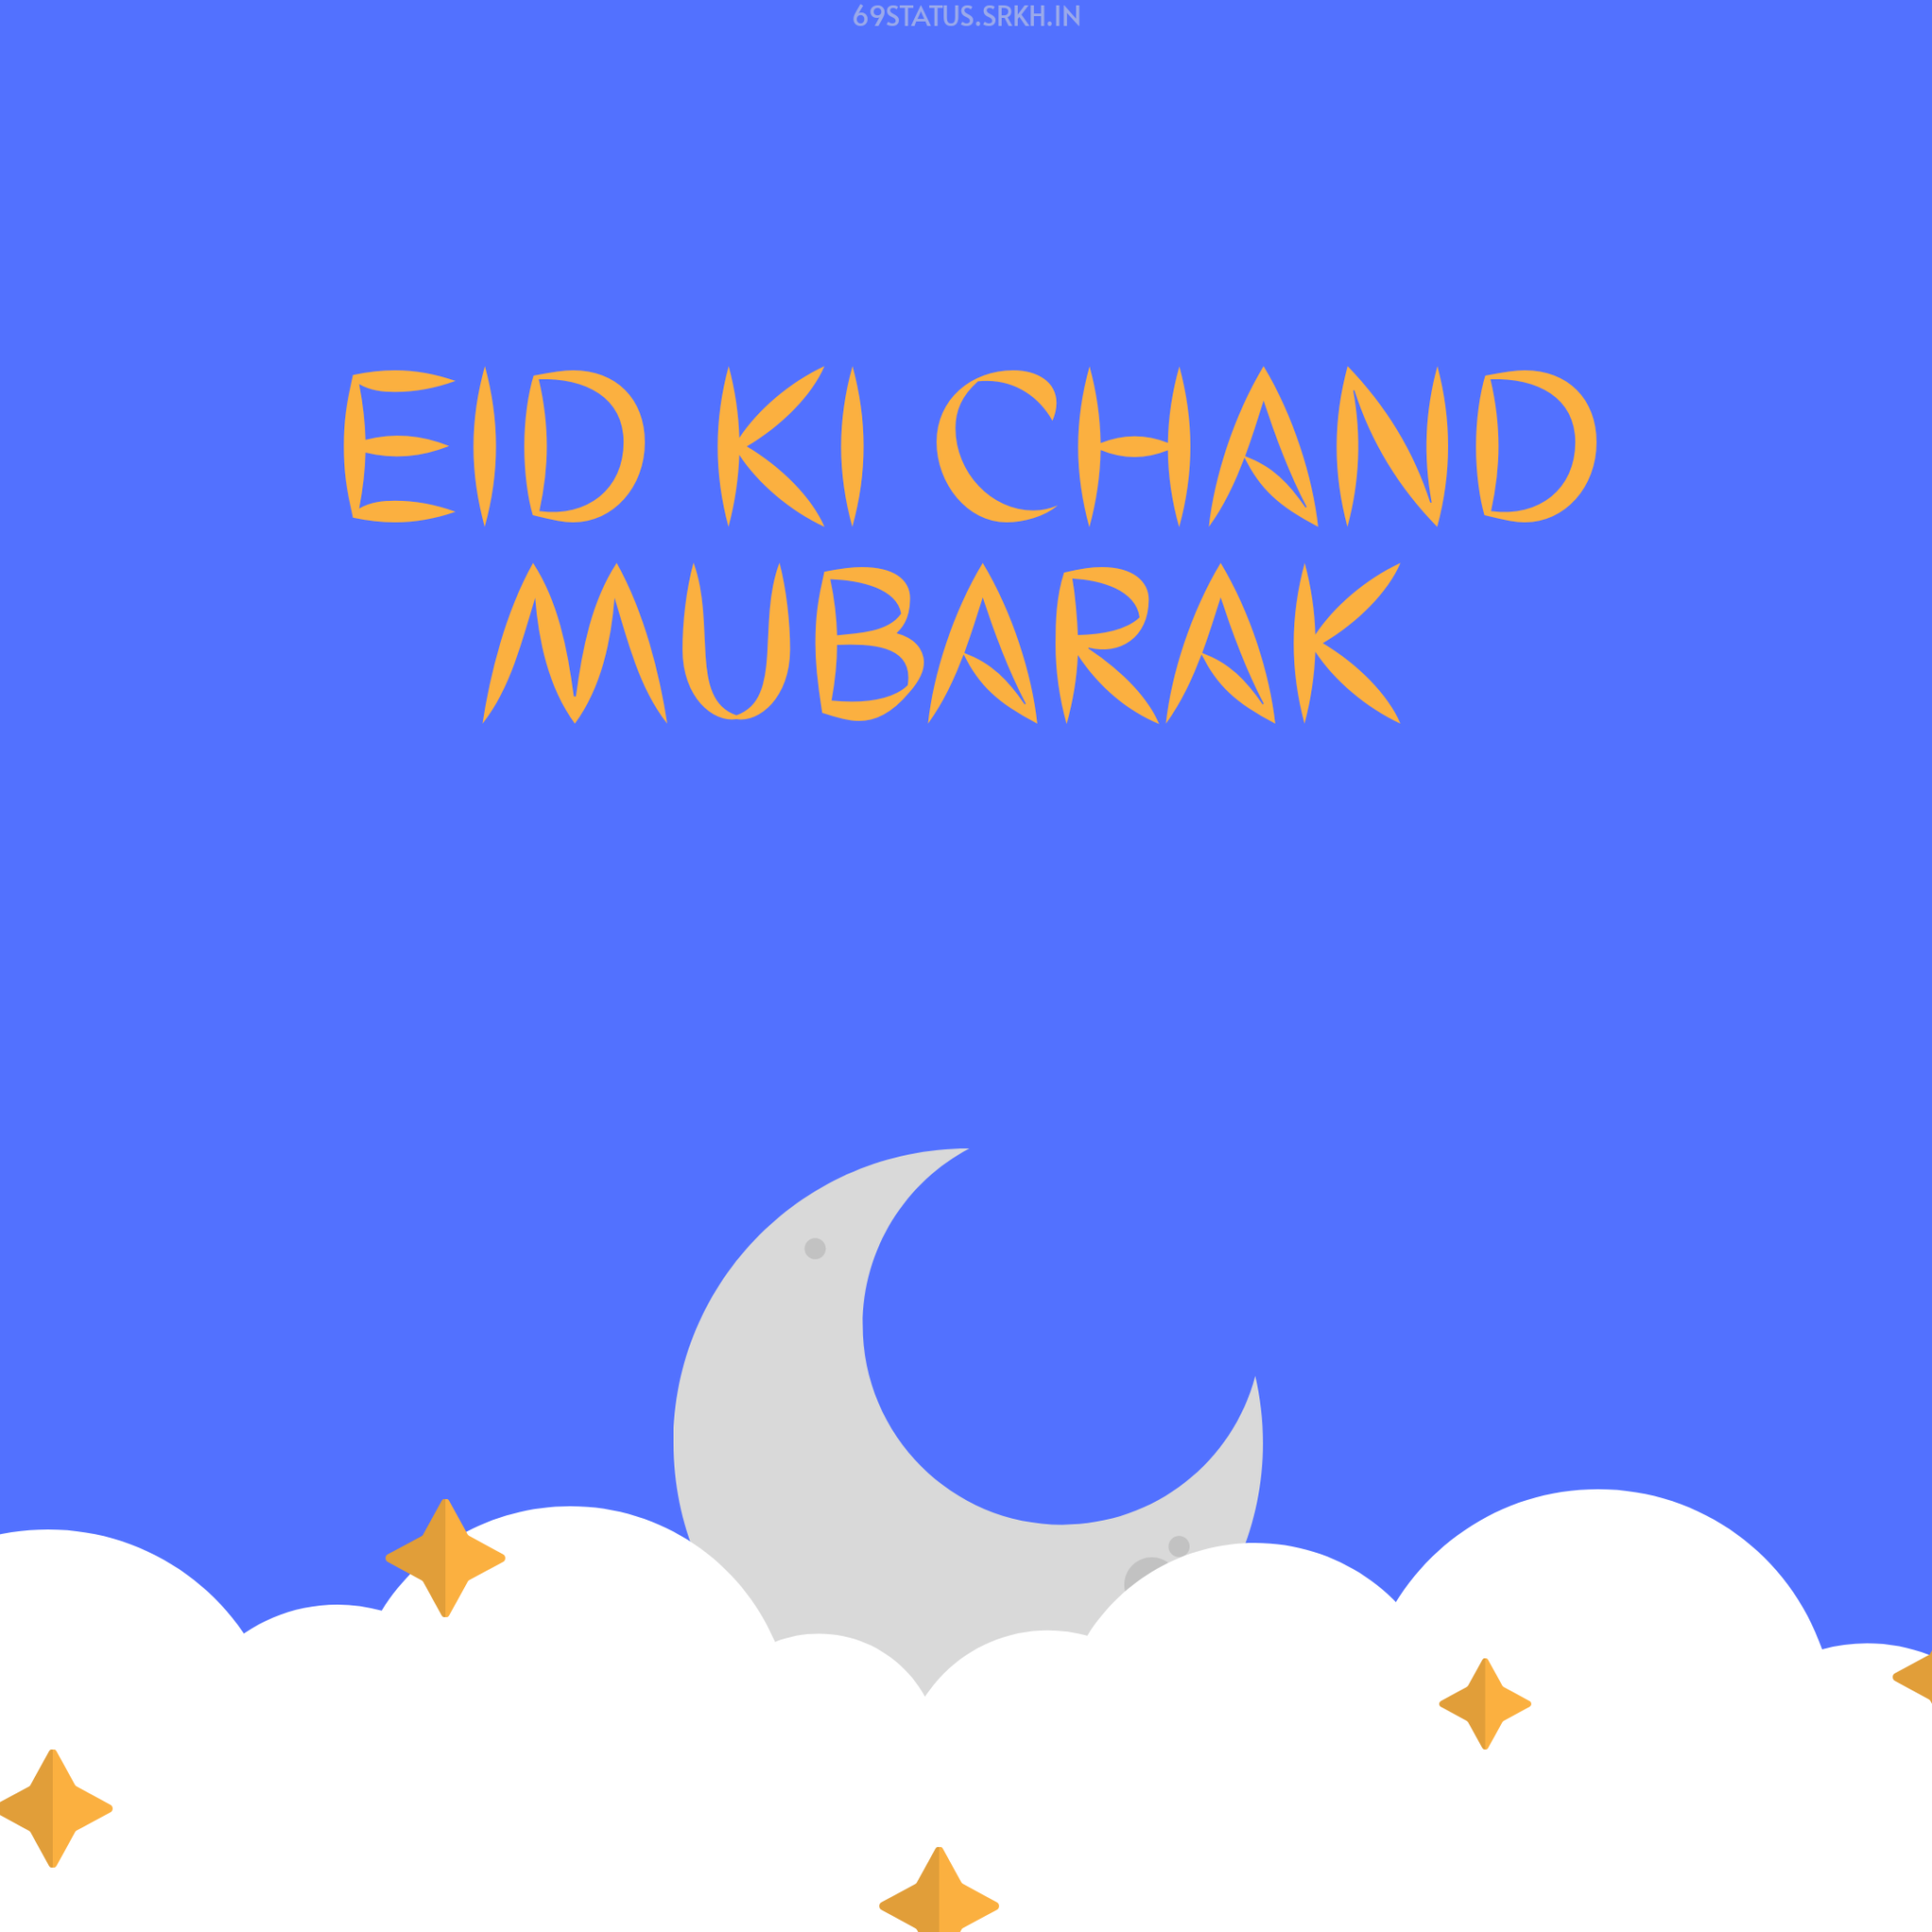 Eid ki chand mubarak image